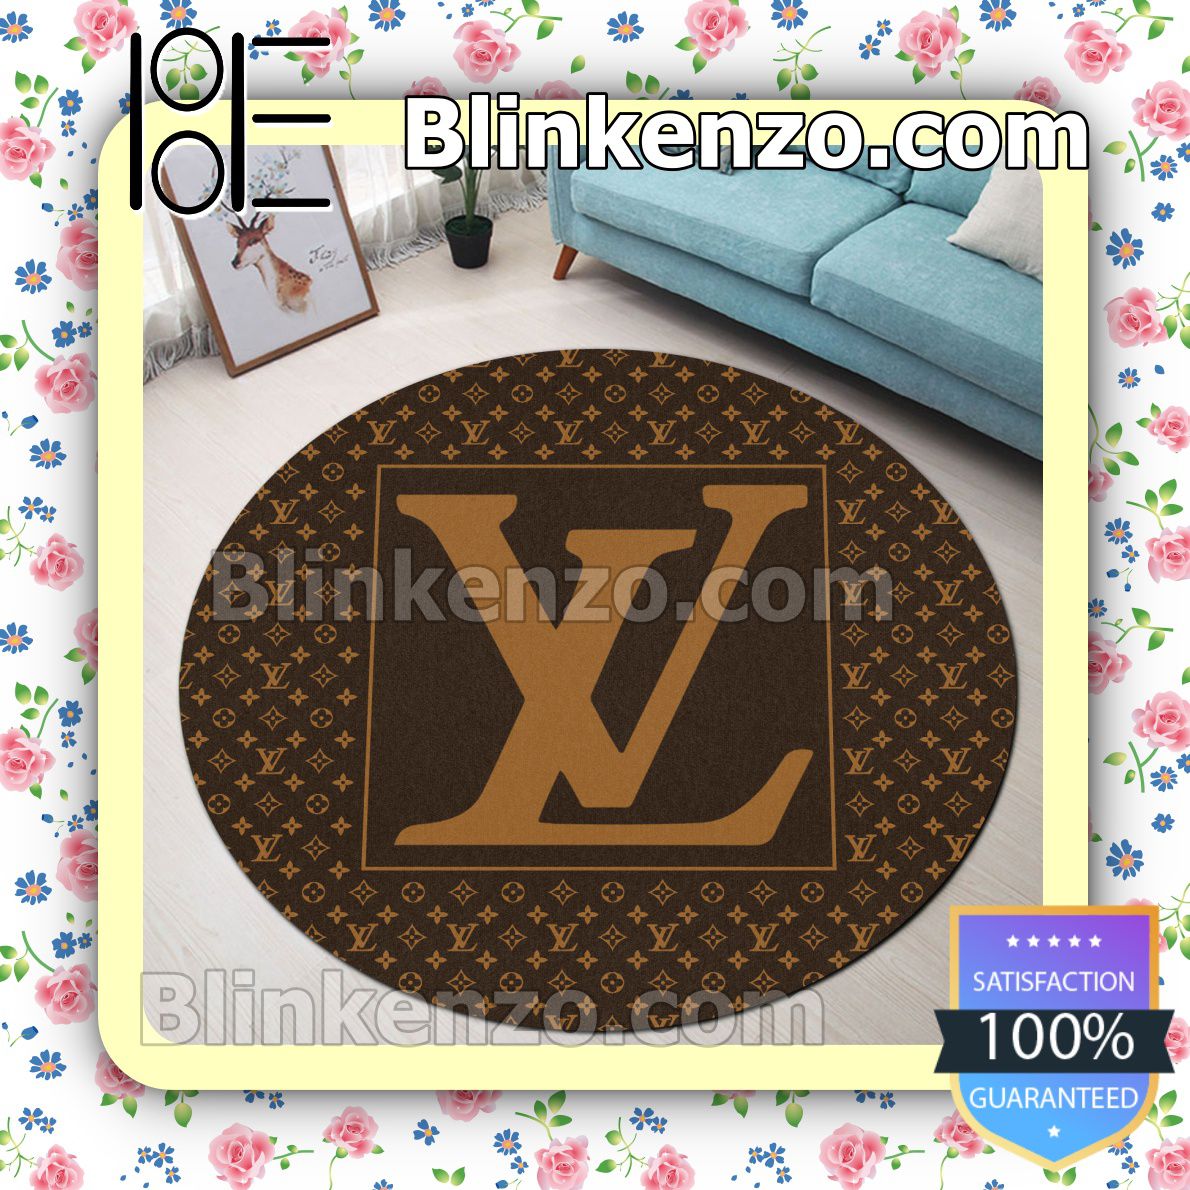 Louis Vuitton Dark Brown Monogram With Big Logo In Square Center Round Carpet Runners